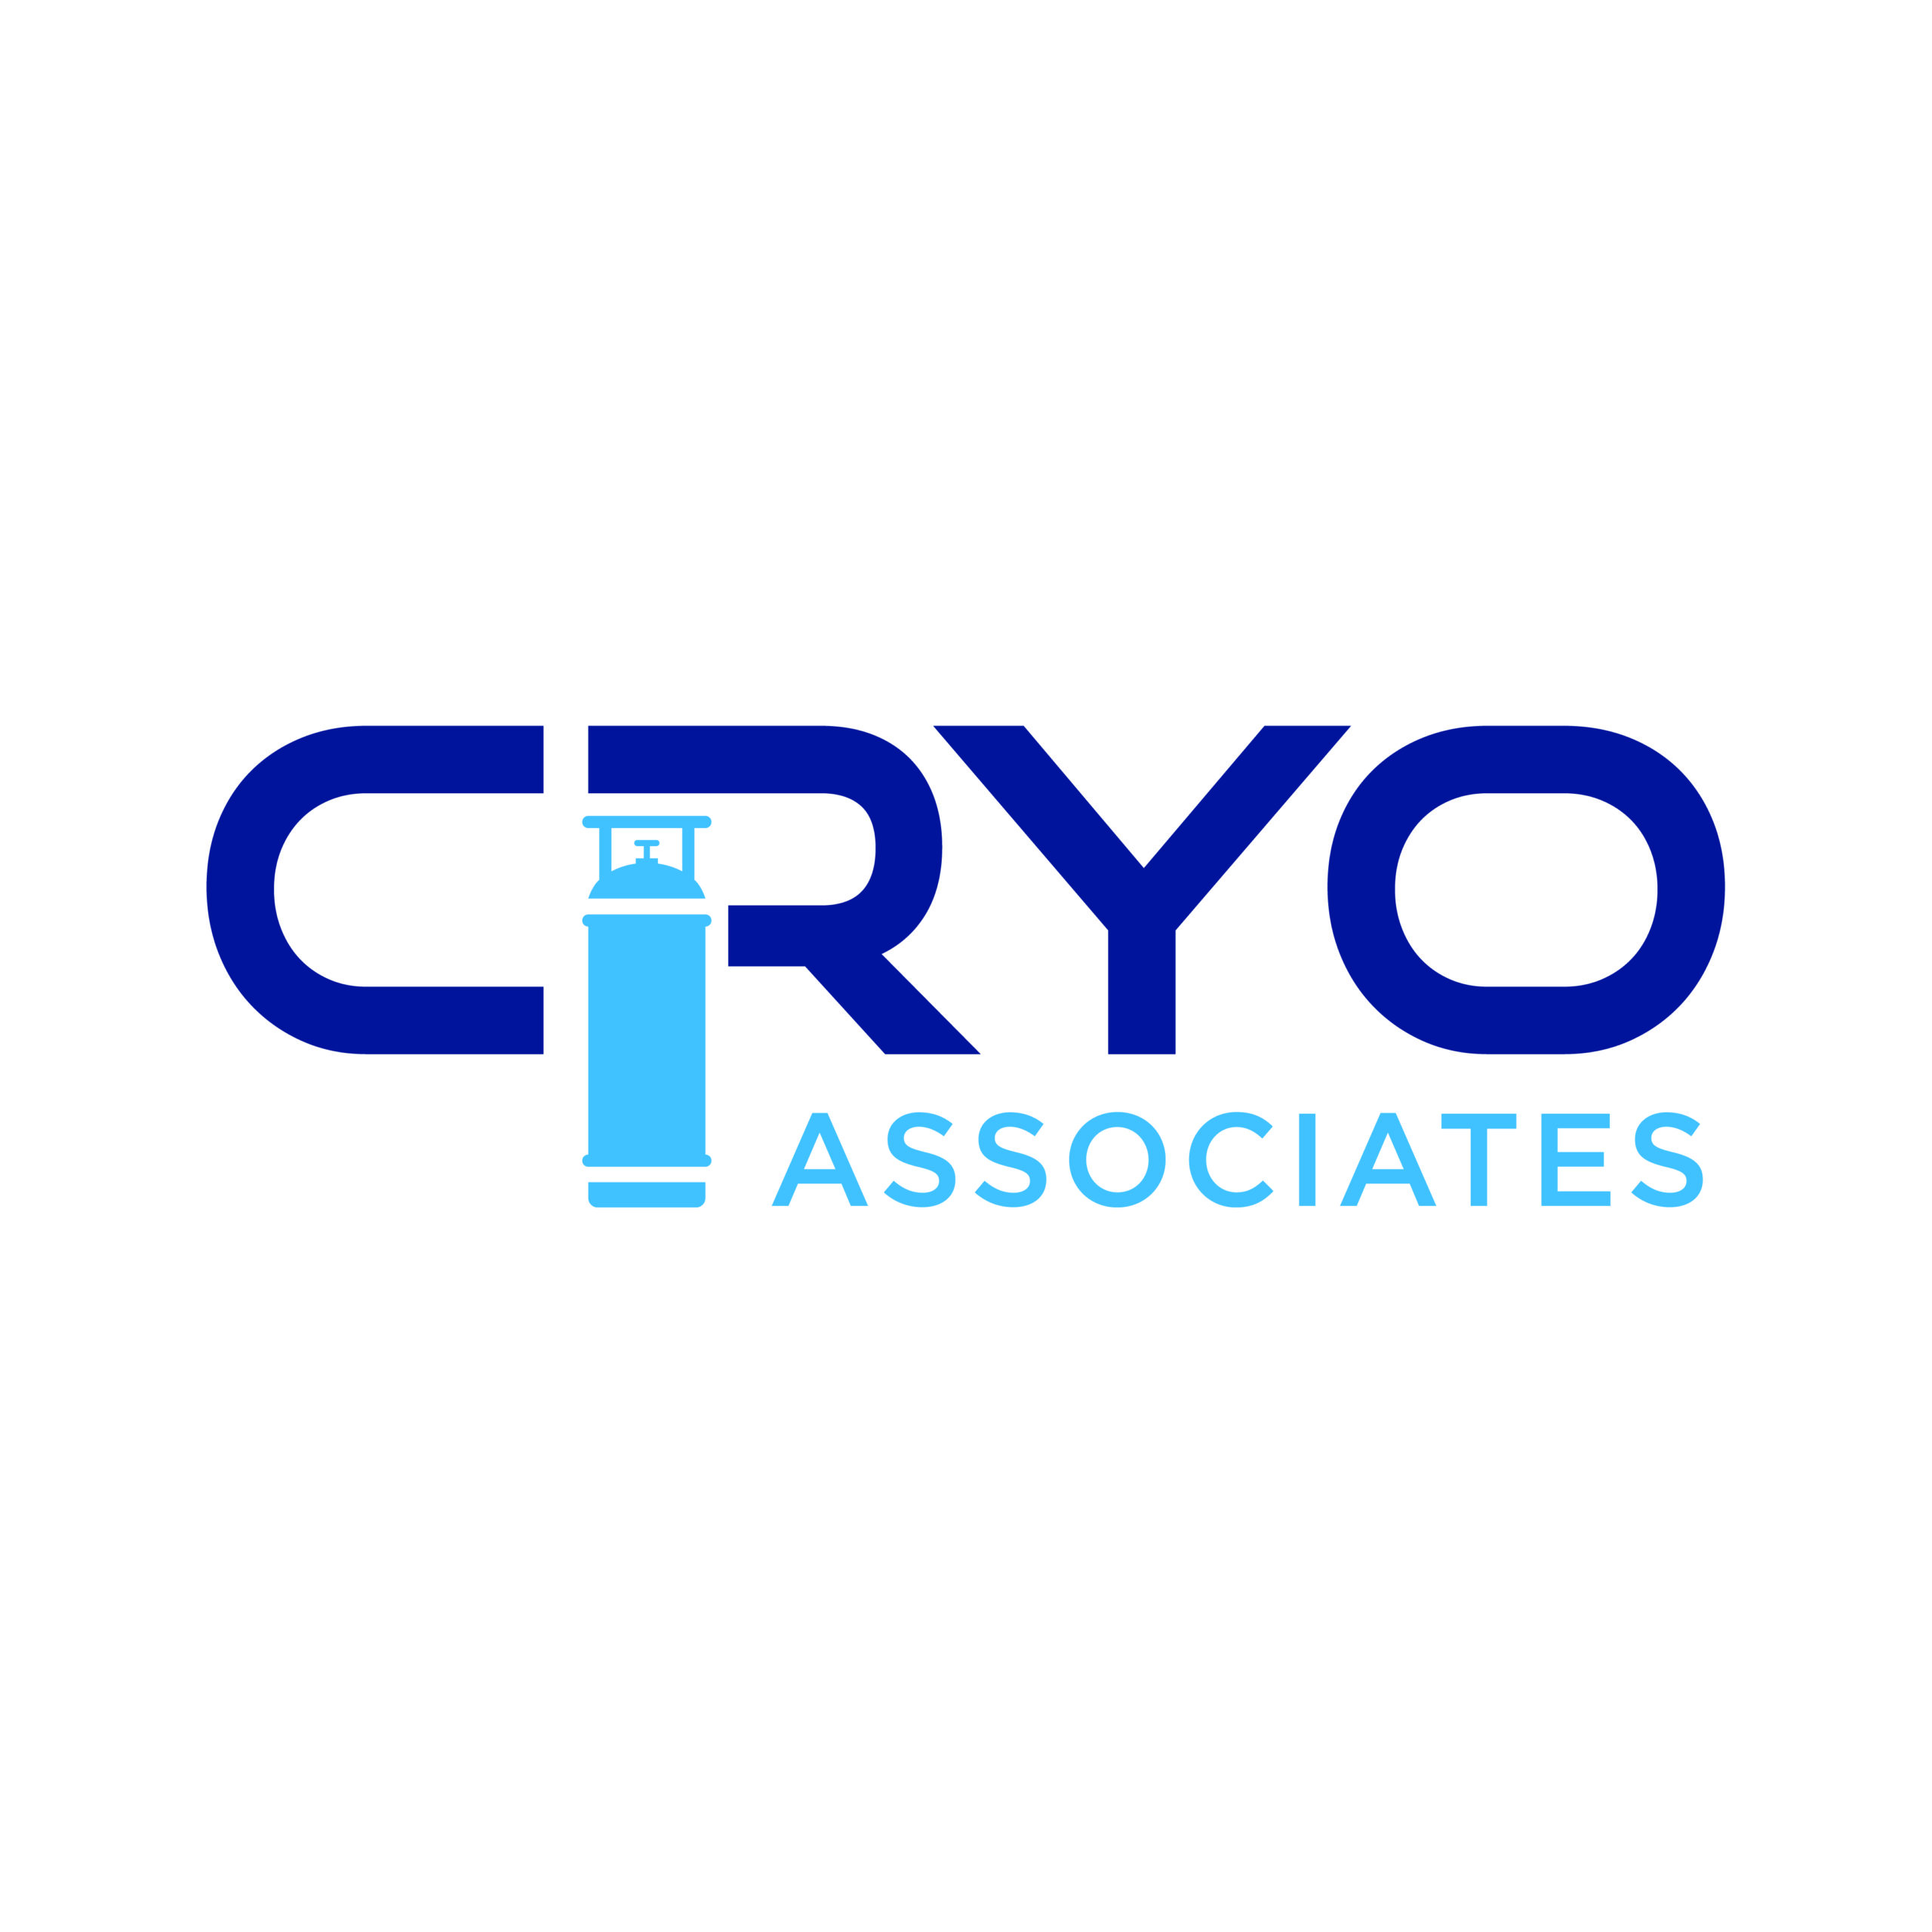 Cryo Associates, Inc.